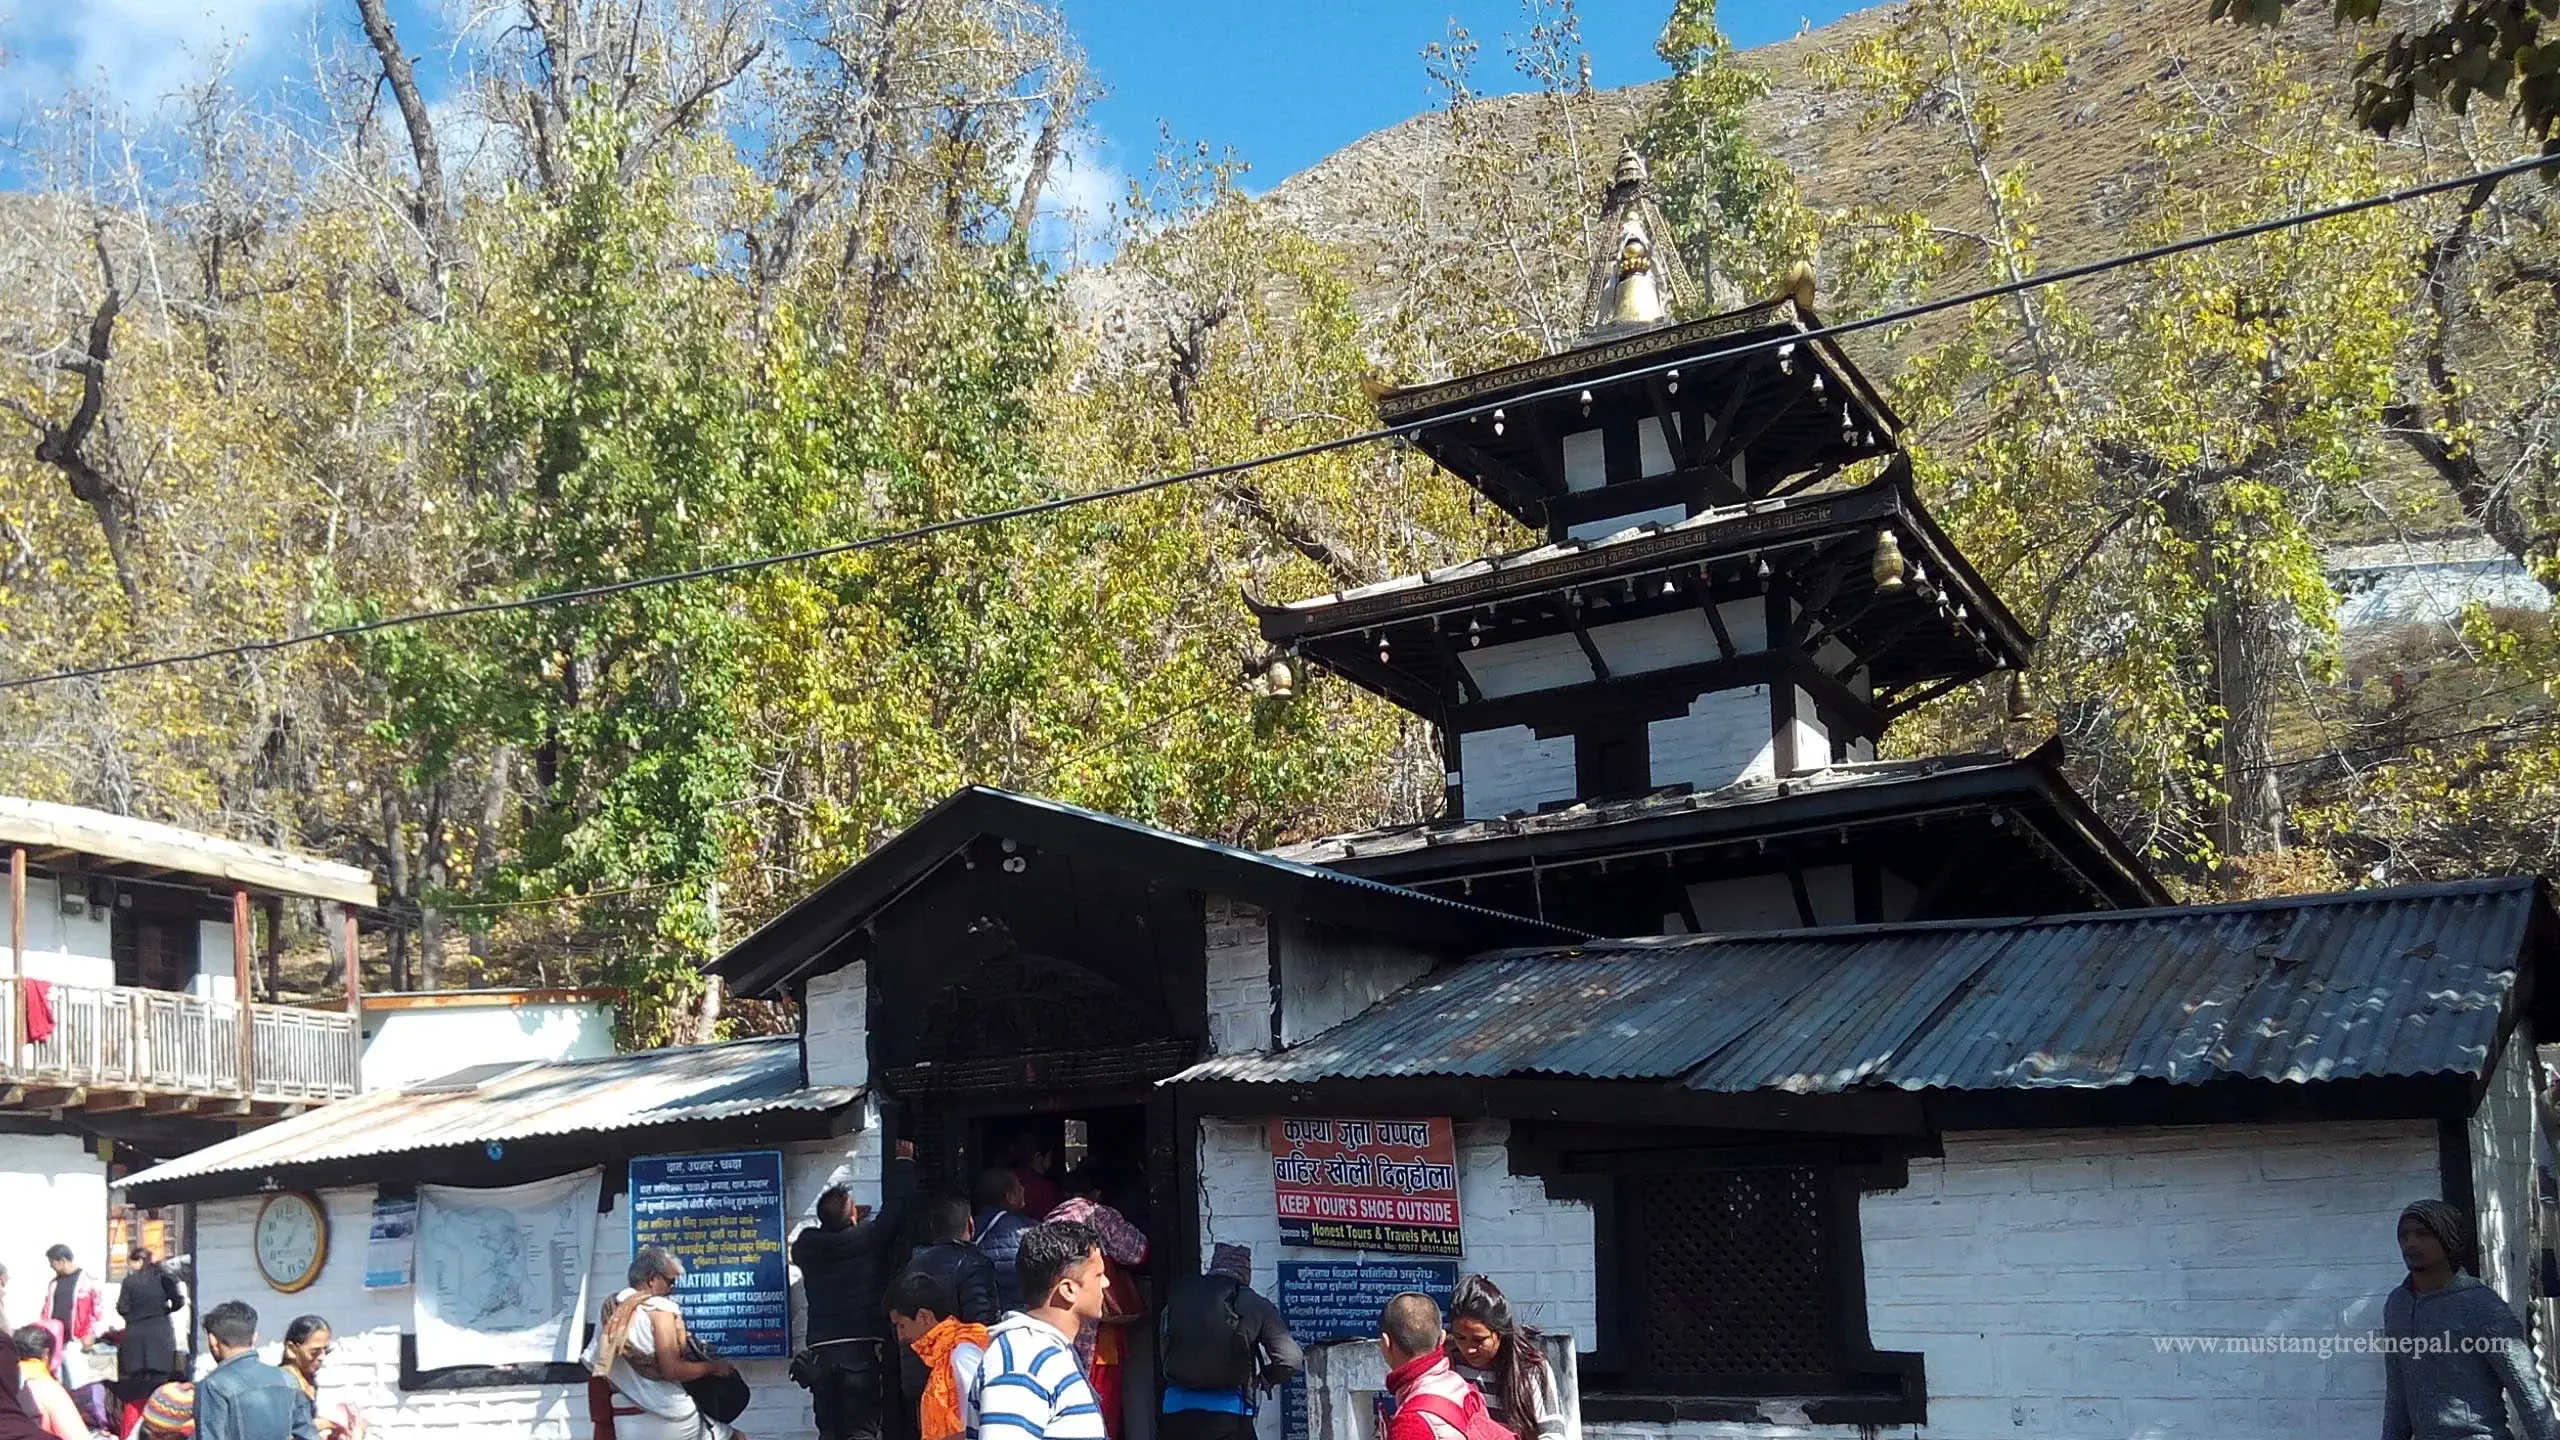 Muktinath tour package cost for Muktinath yatra pilgrimage